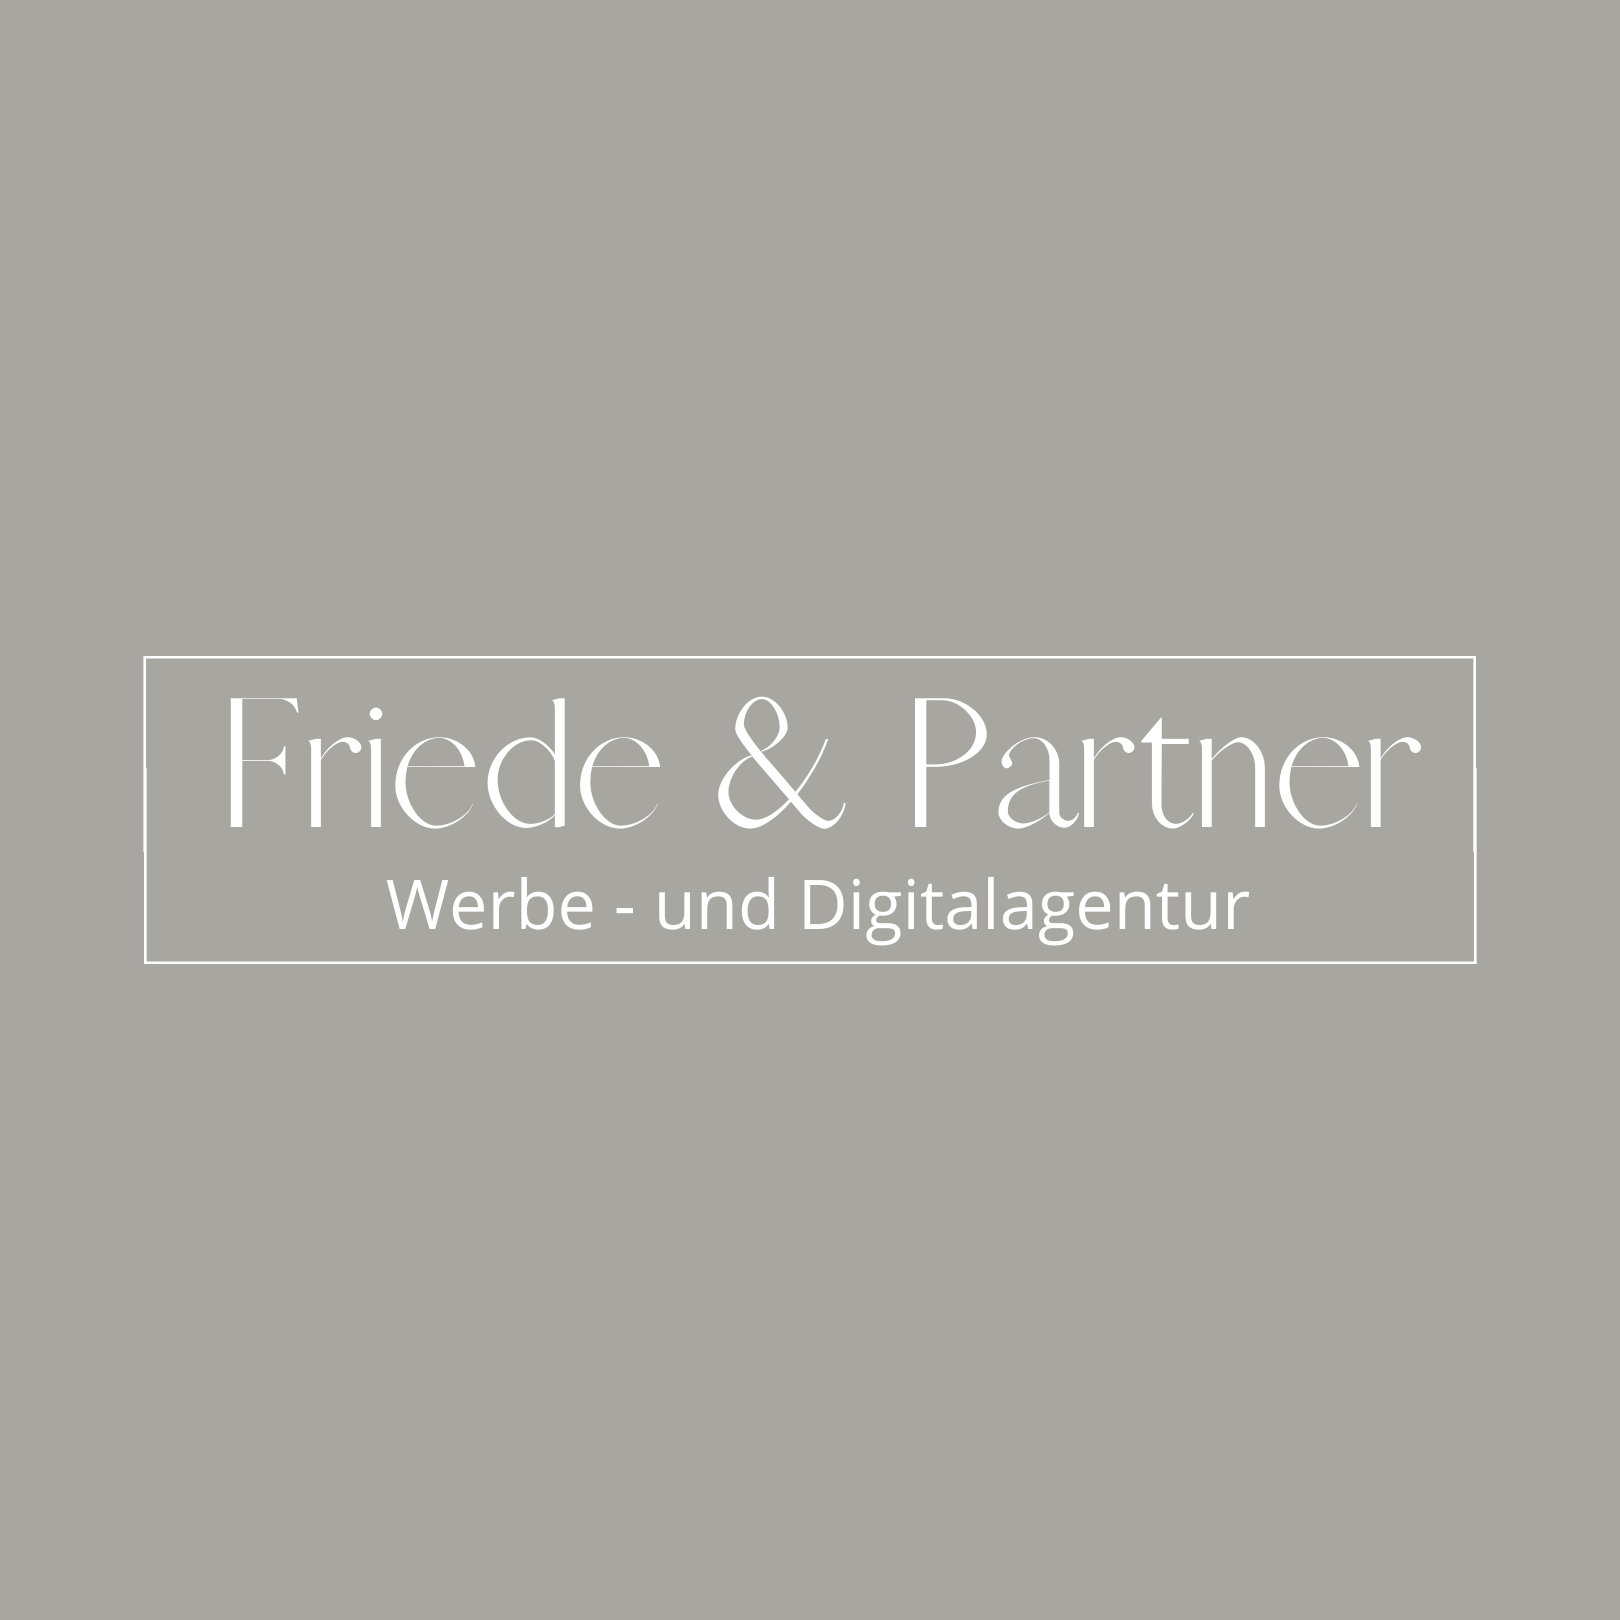 Friede & Partner in Erlangen